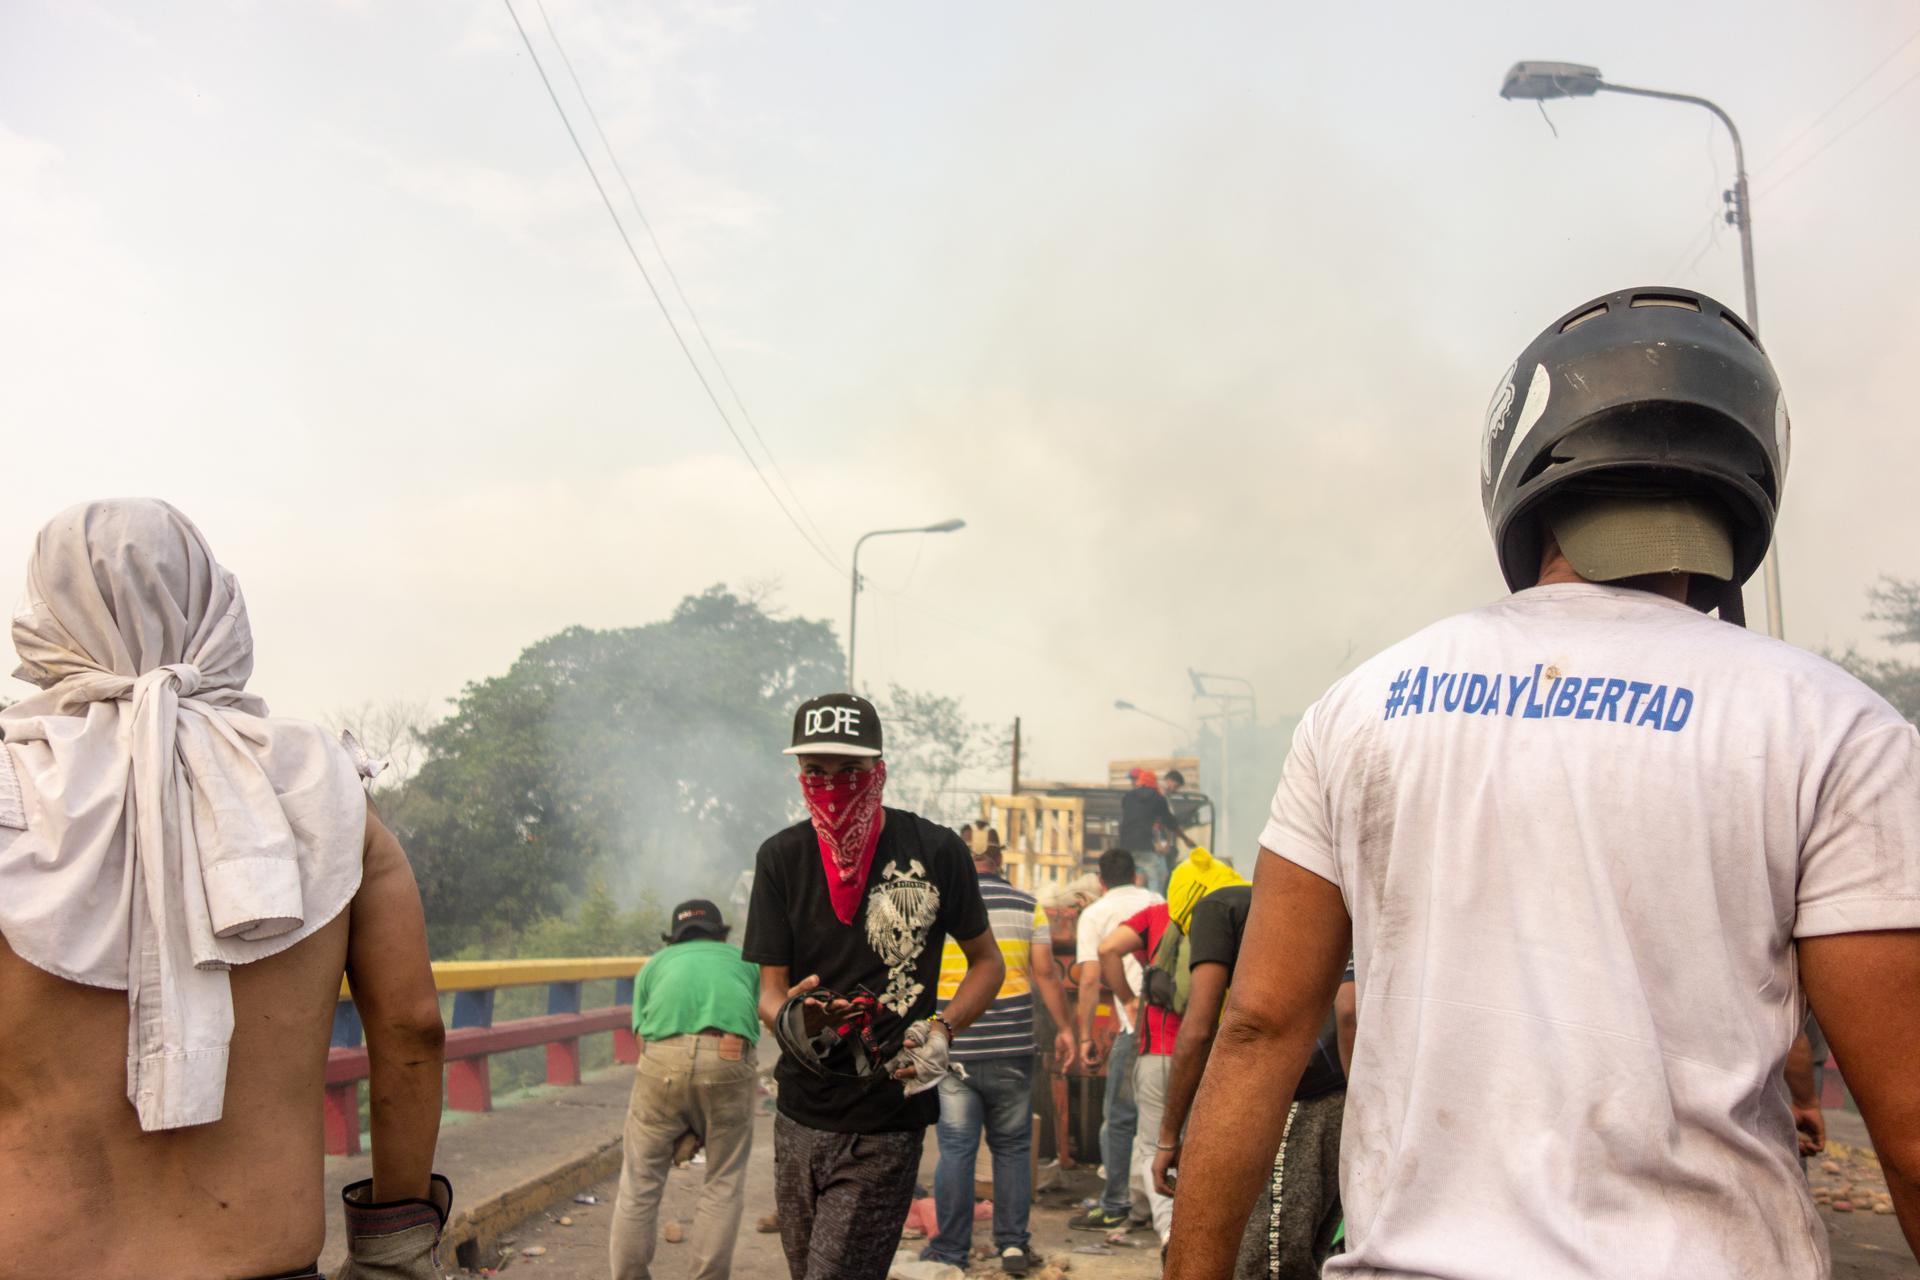 protest at venezuelan border